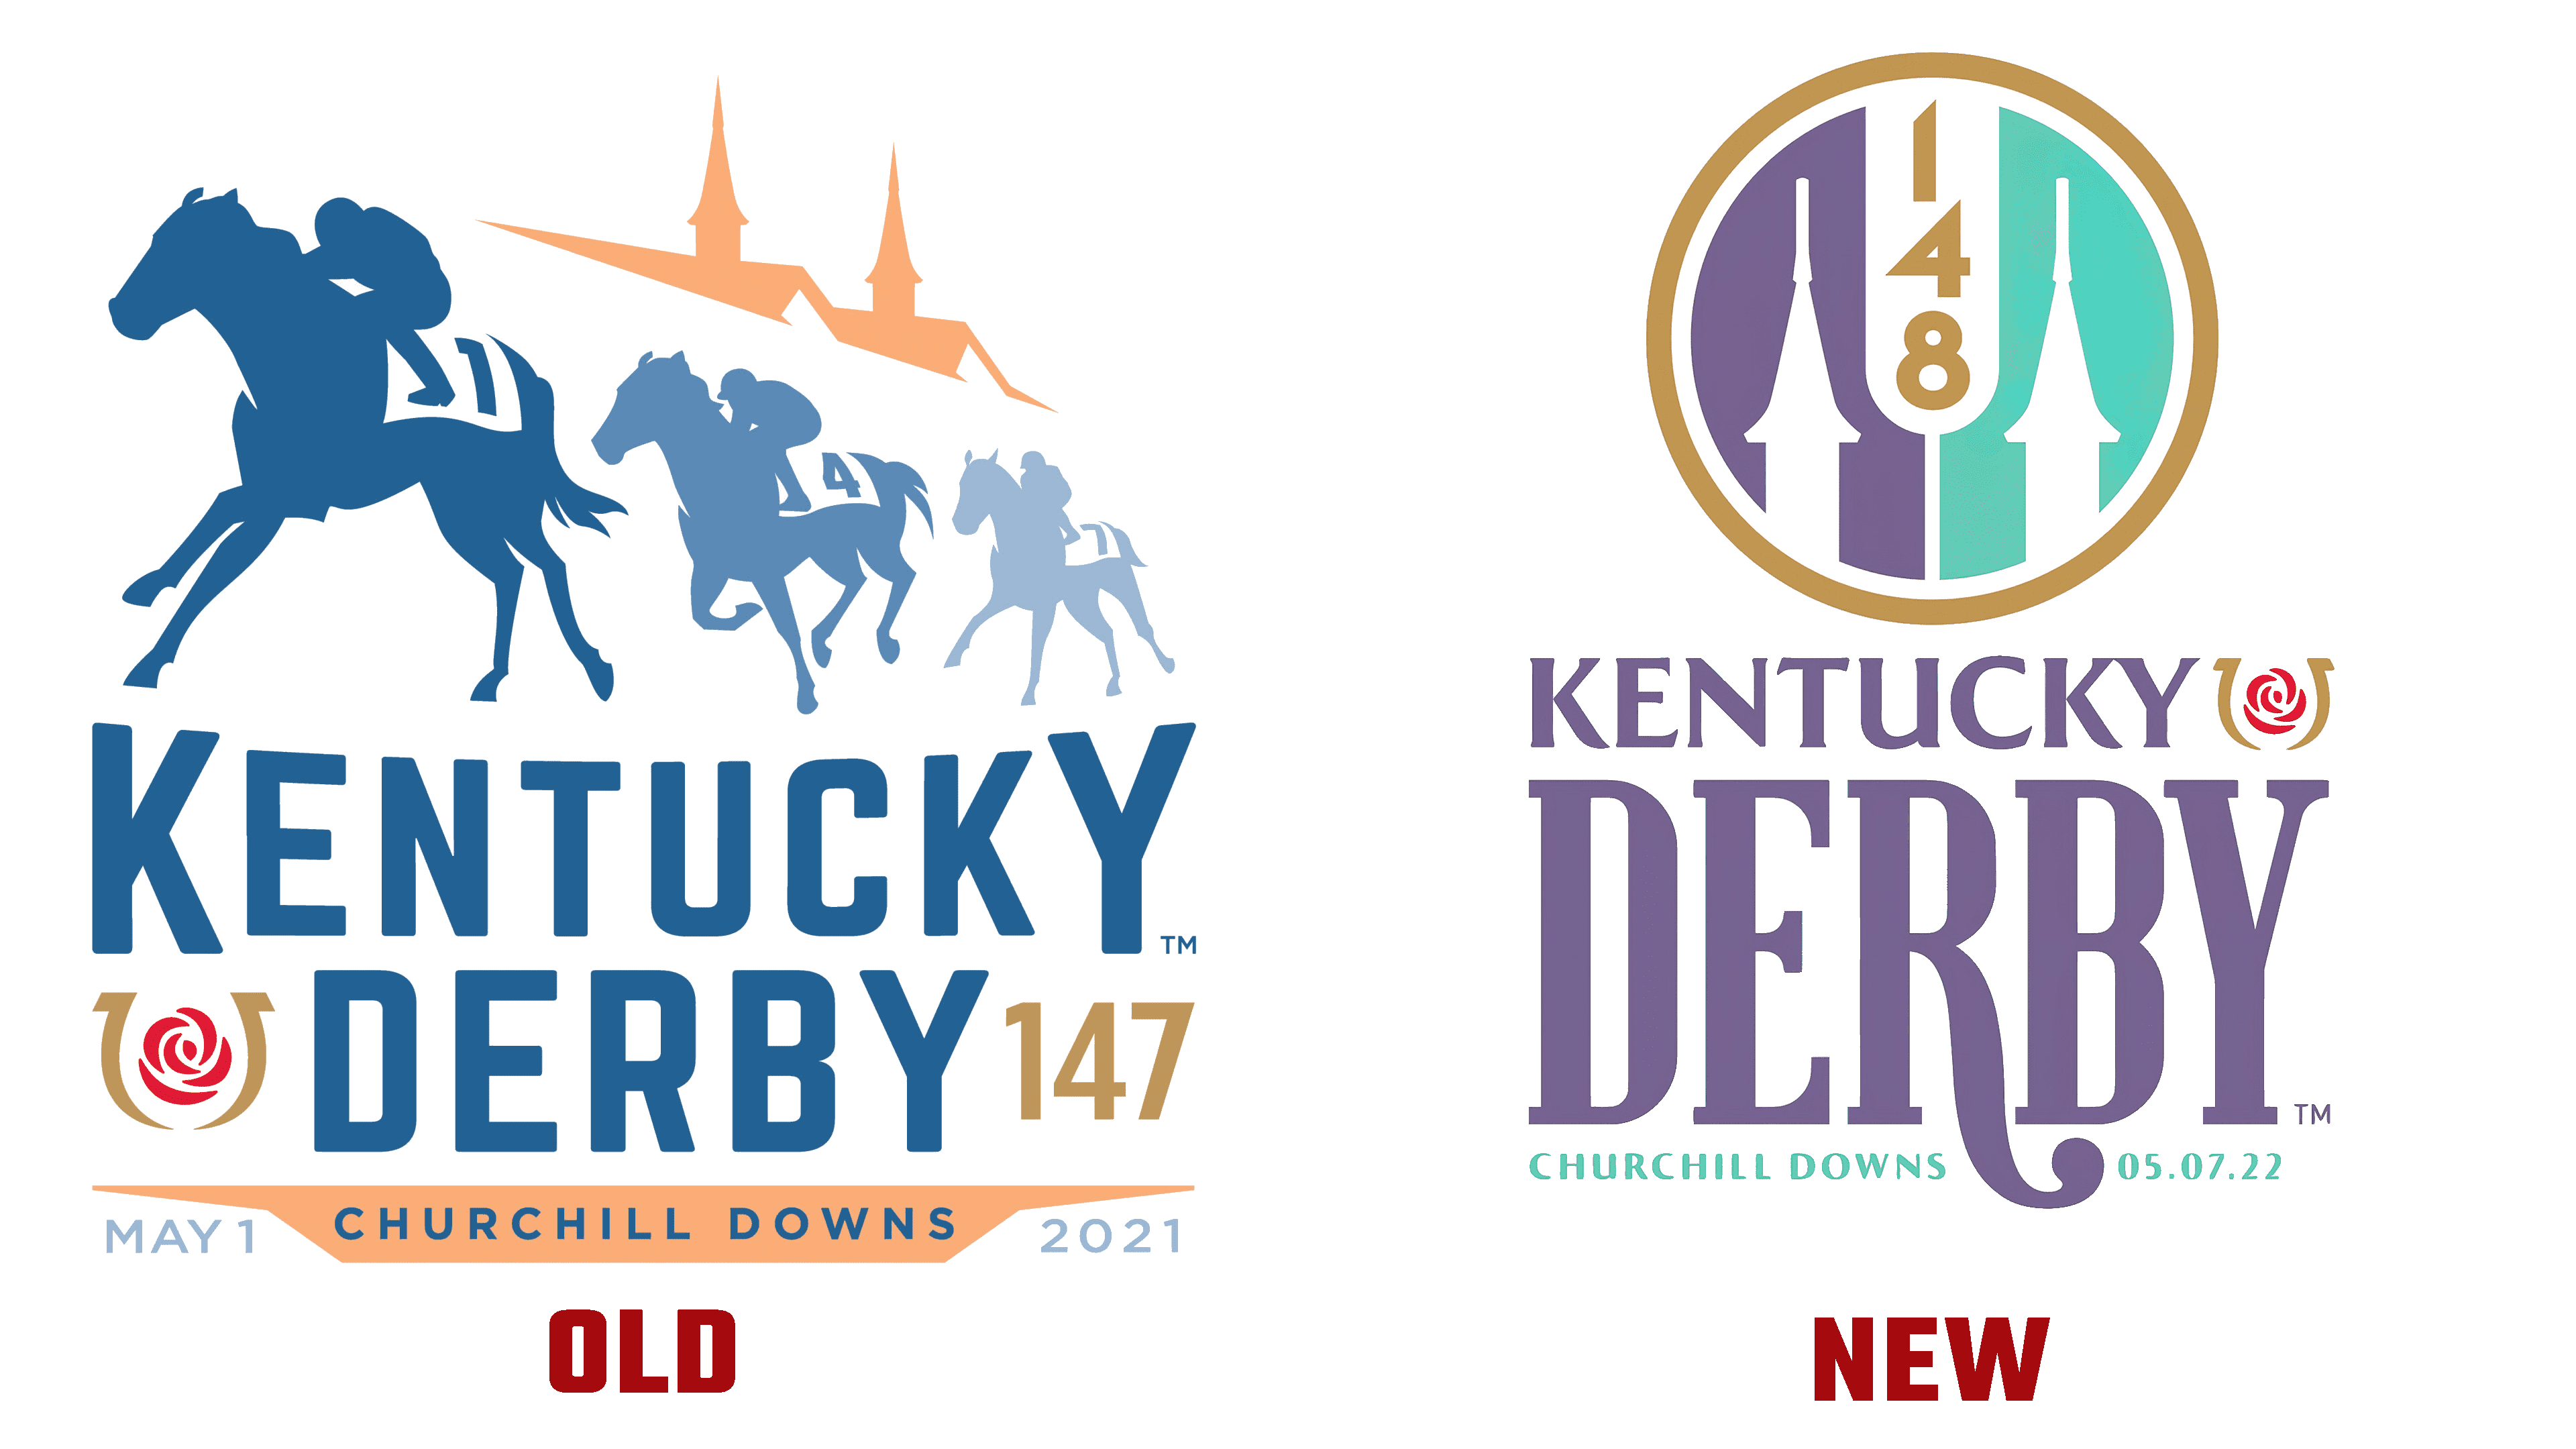 New Kentucky Derby logo introduced